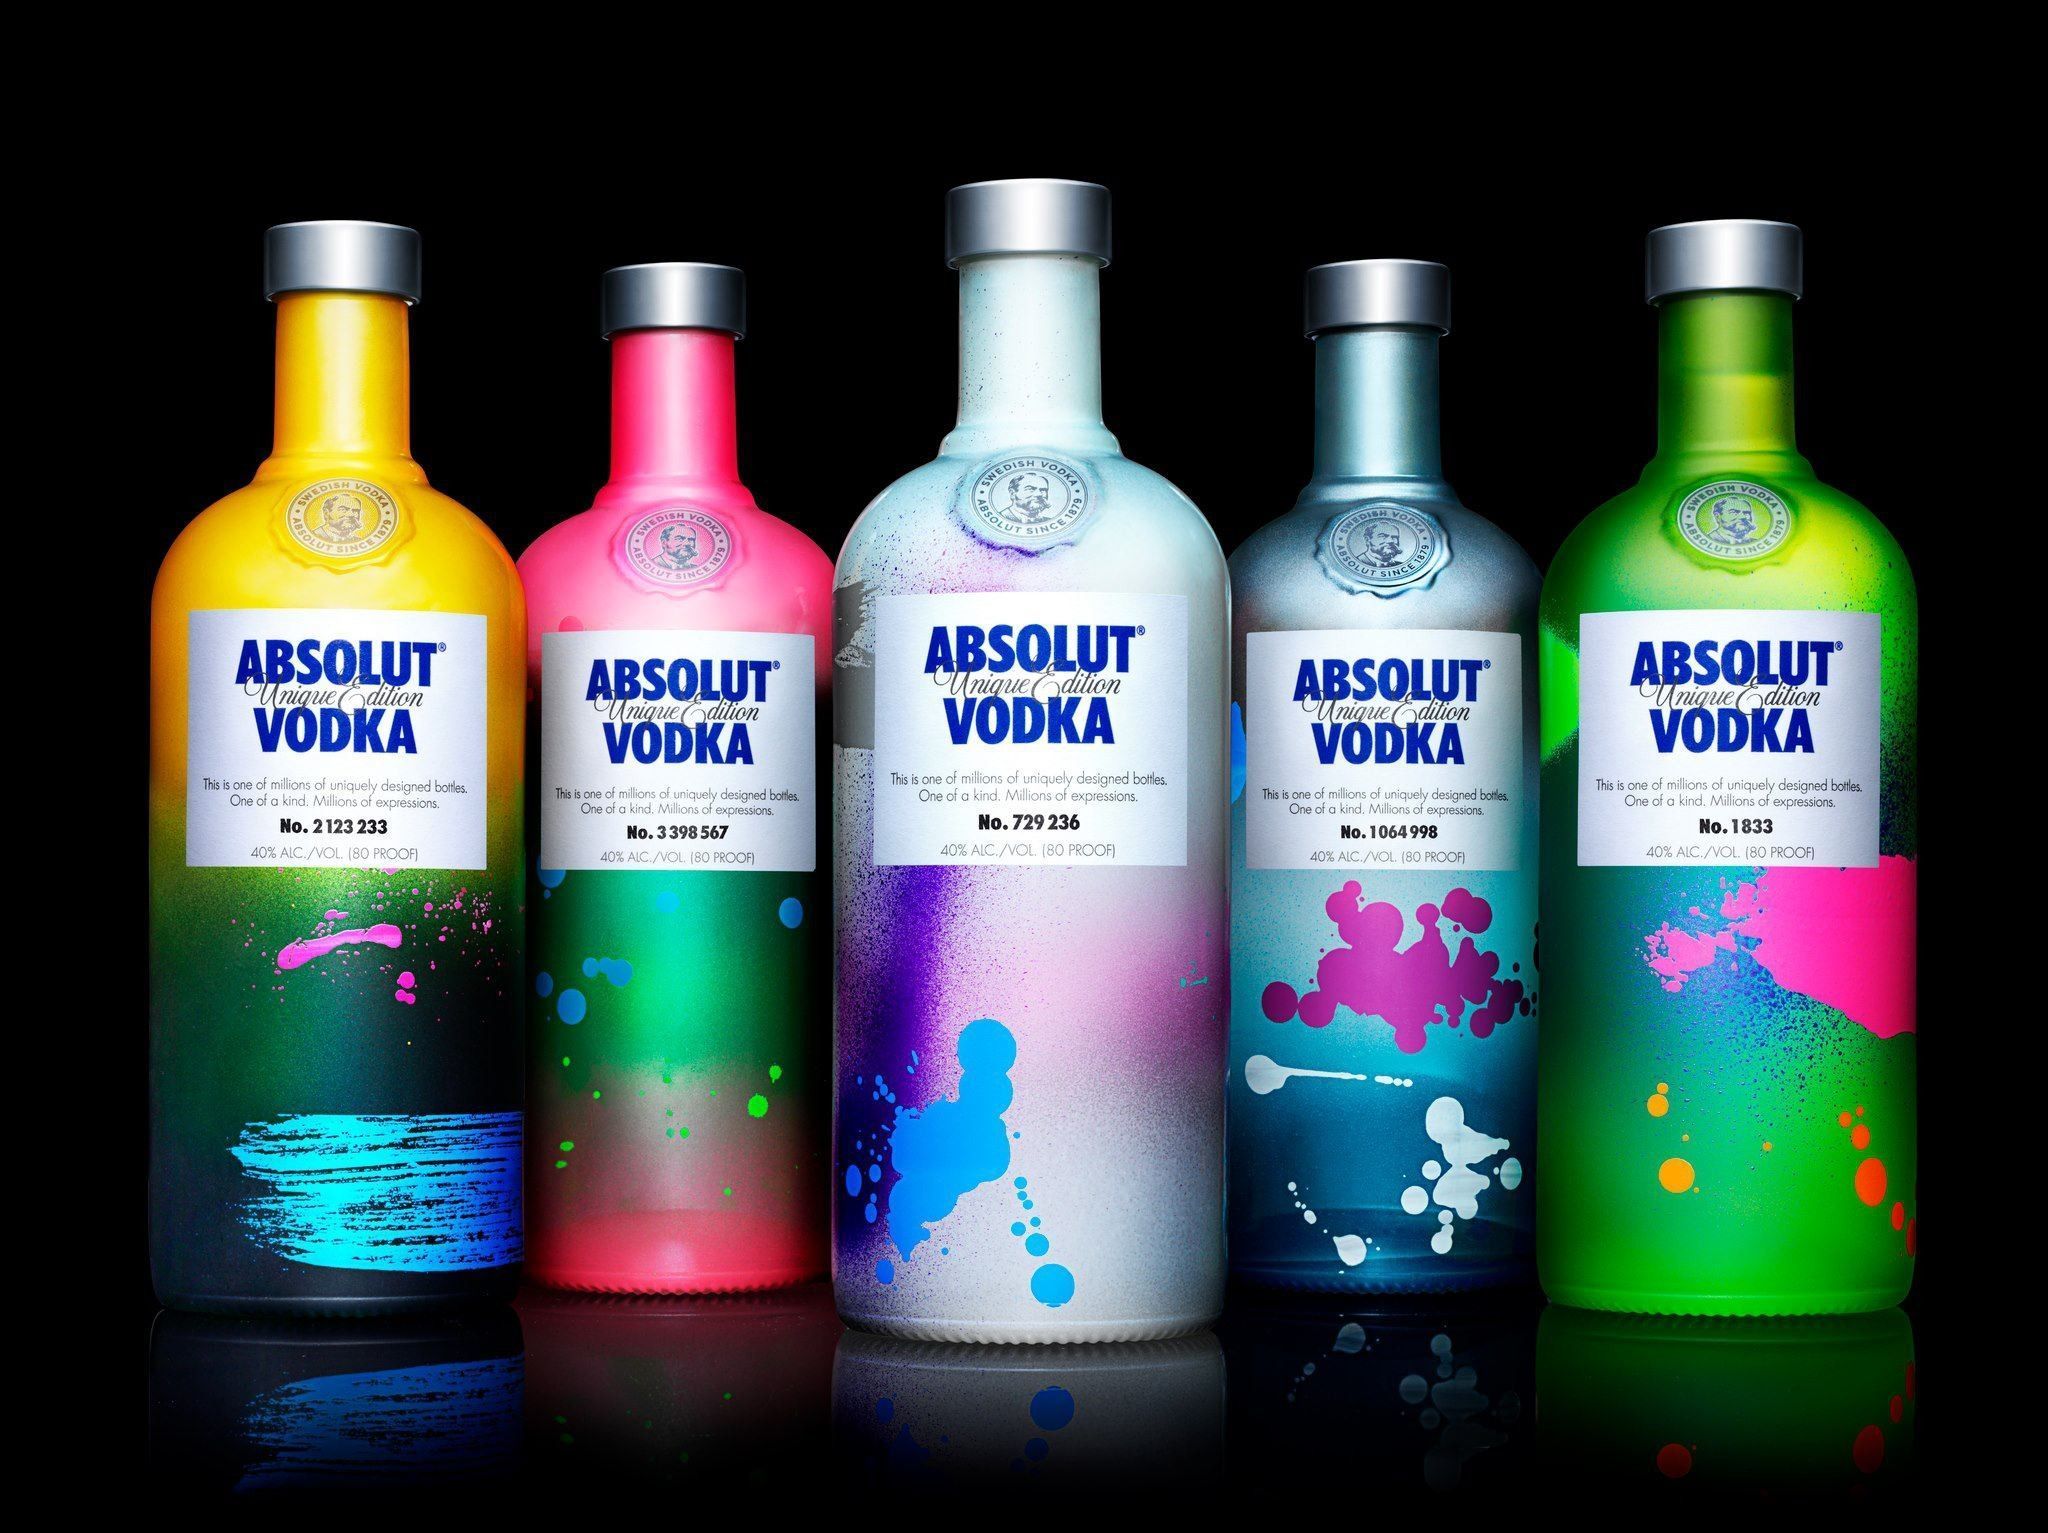 design, vodka, bottles, alcohol, Absolut, drinks :: Wallpapers